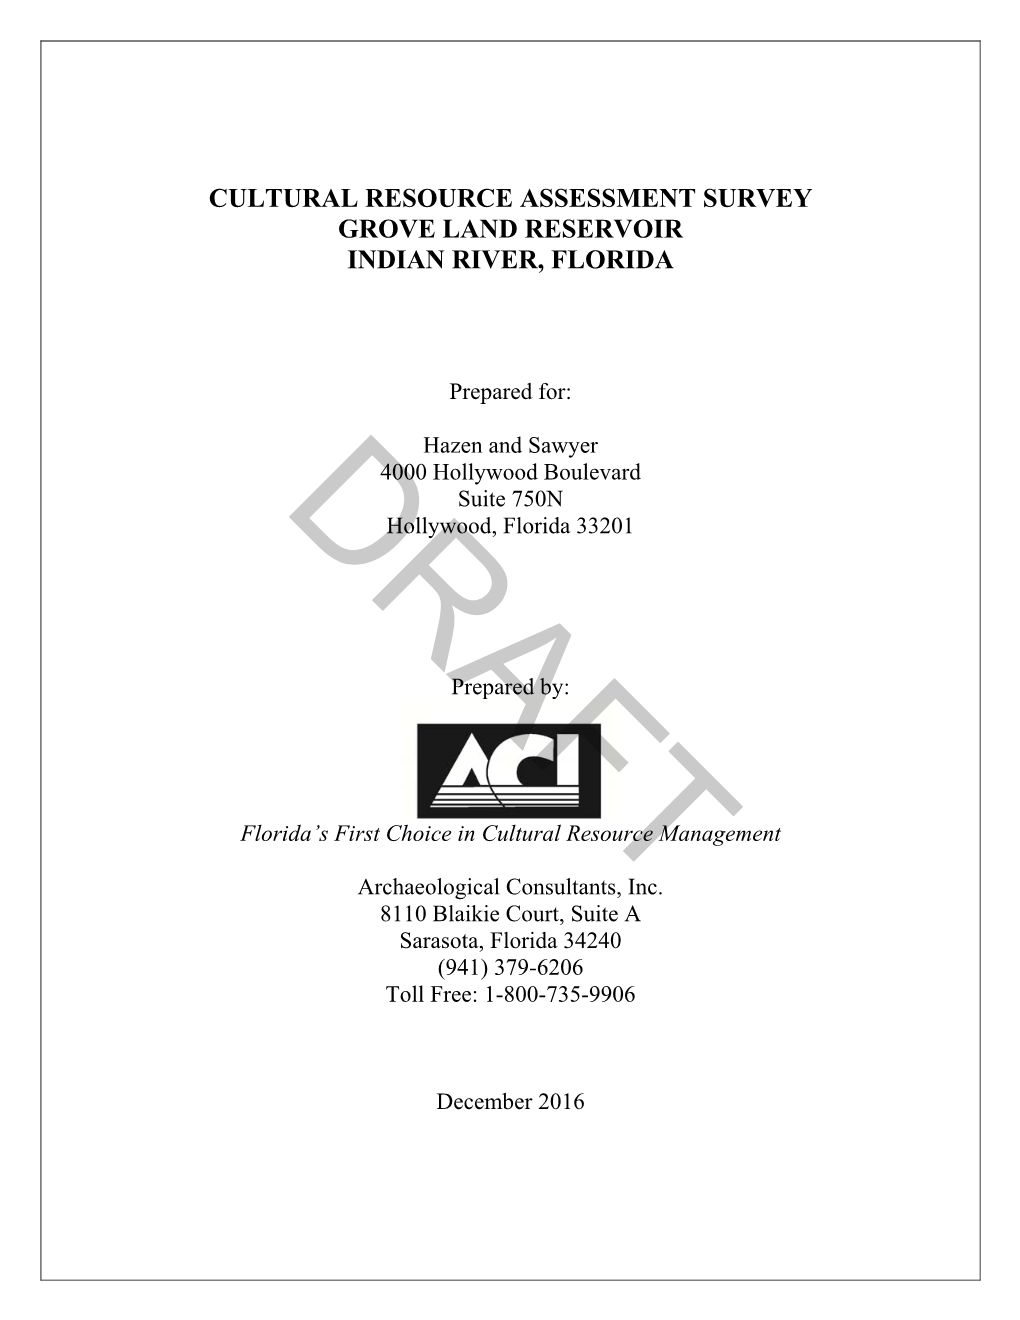 Cultural Resource Assessment Survey Grove Land Reservoir Indian River, Florida